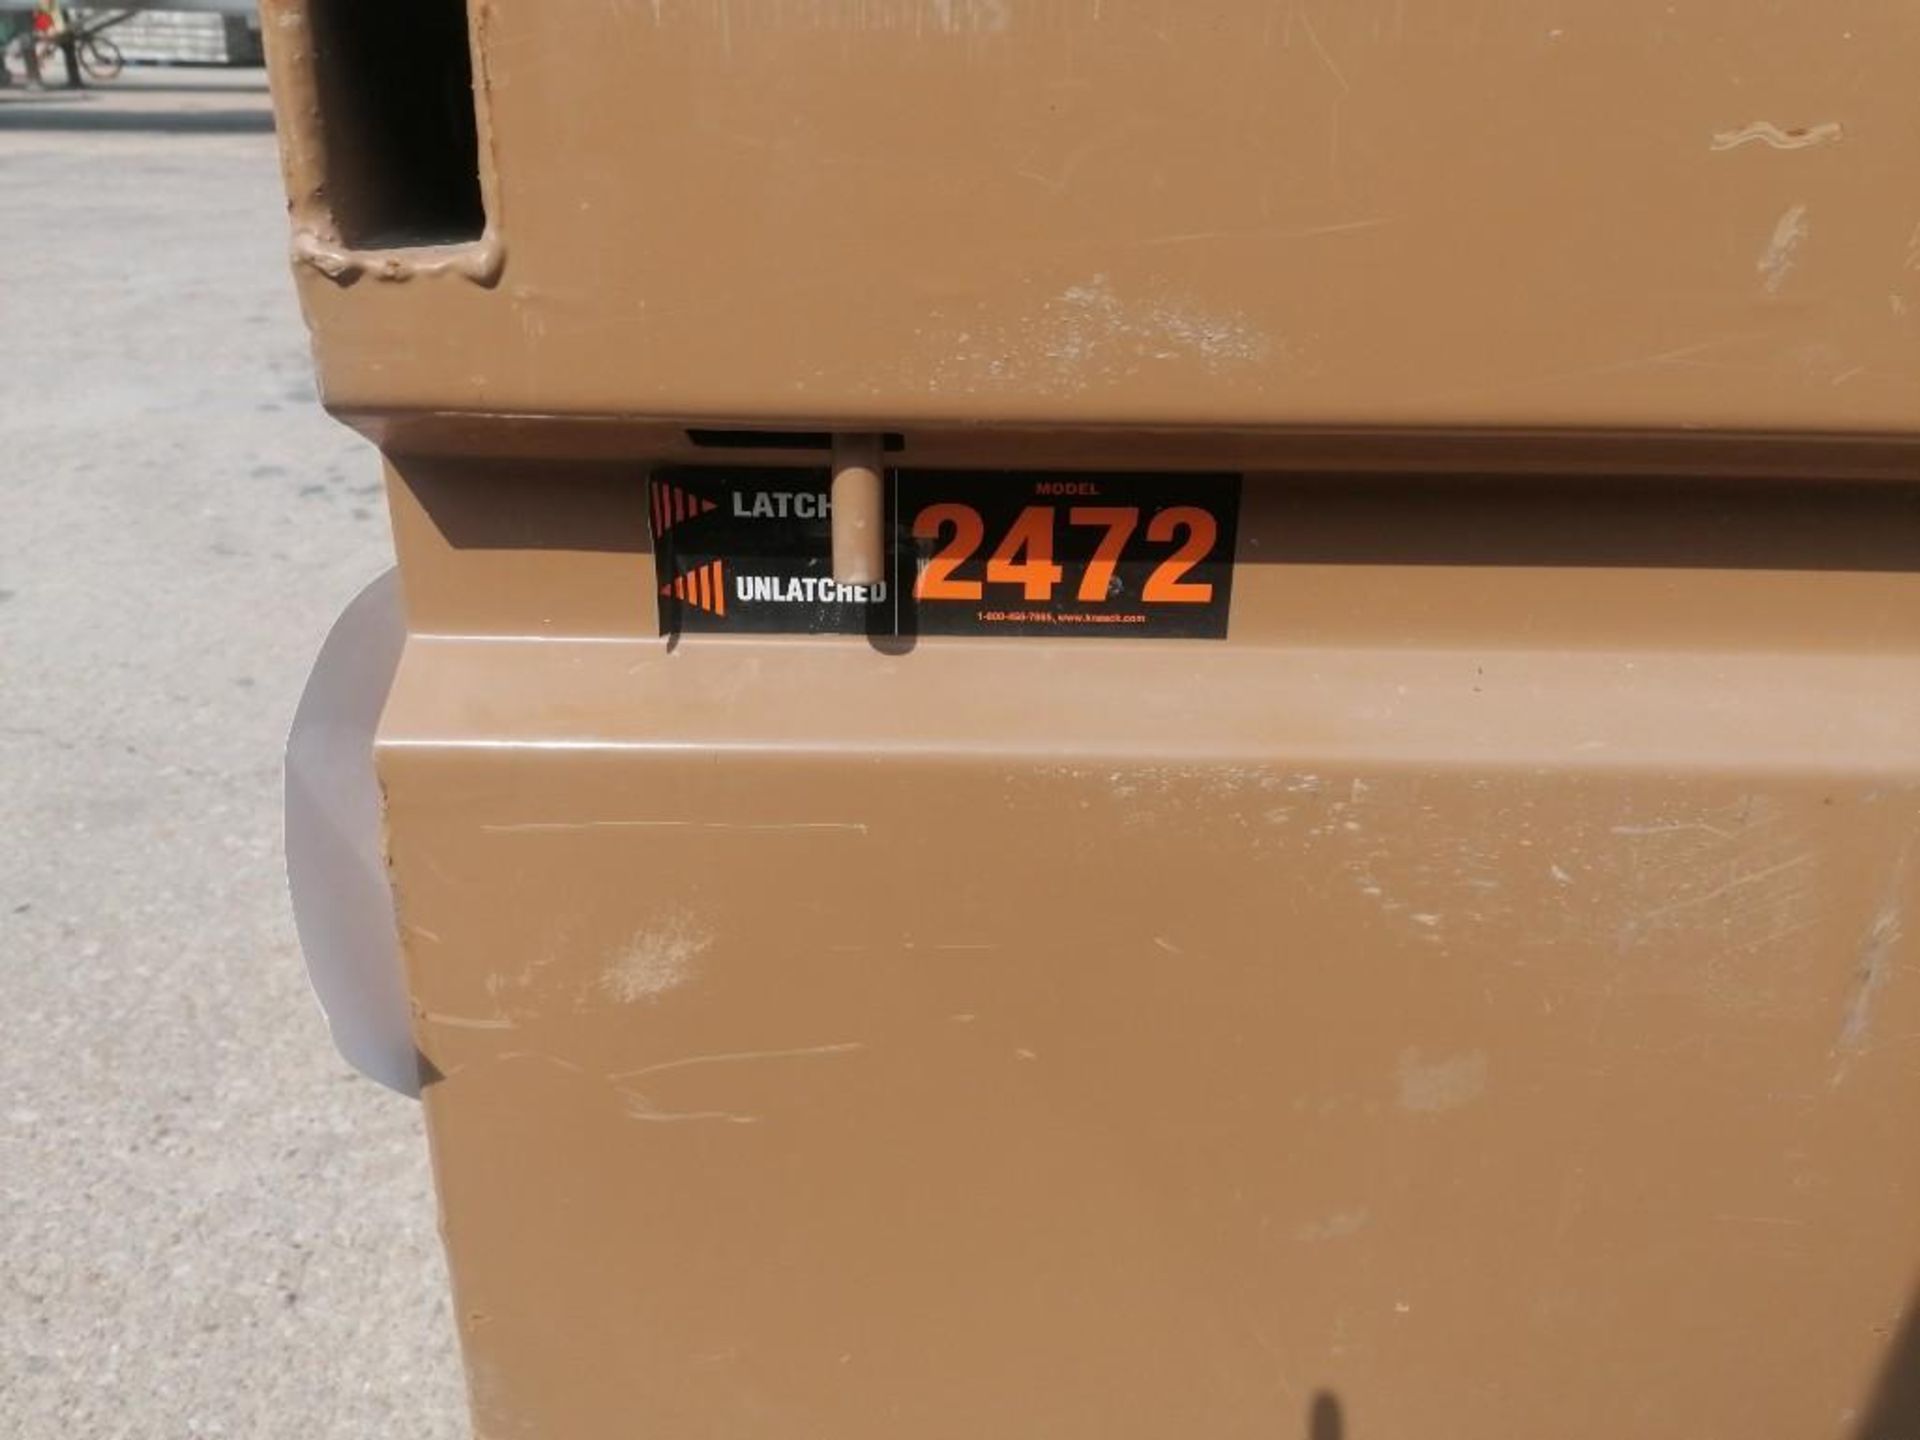 KNAACK Job Box Model 2472. Located at 301 E Henry Street, Mt. Pleasant, IA 52641. - Image 2 of 2